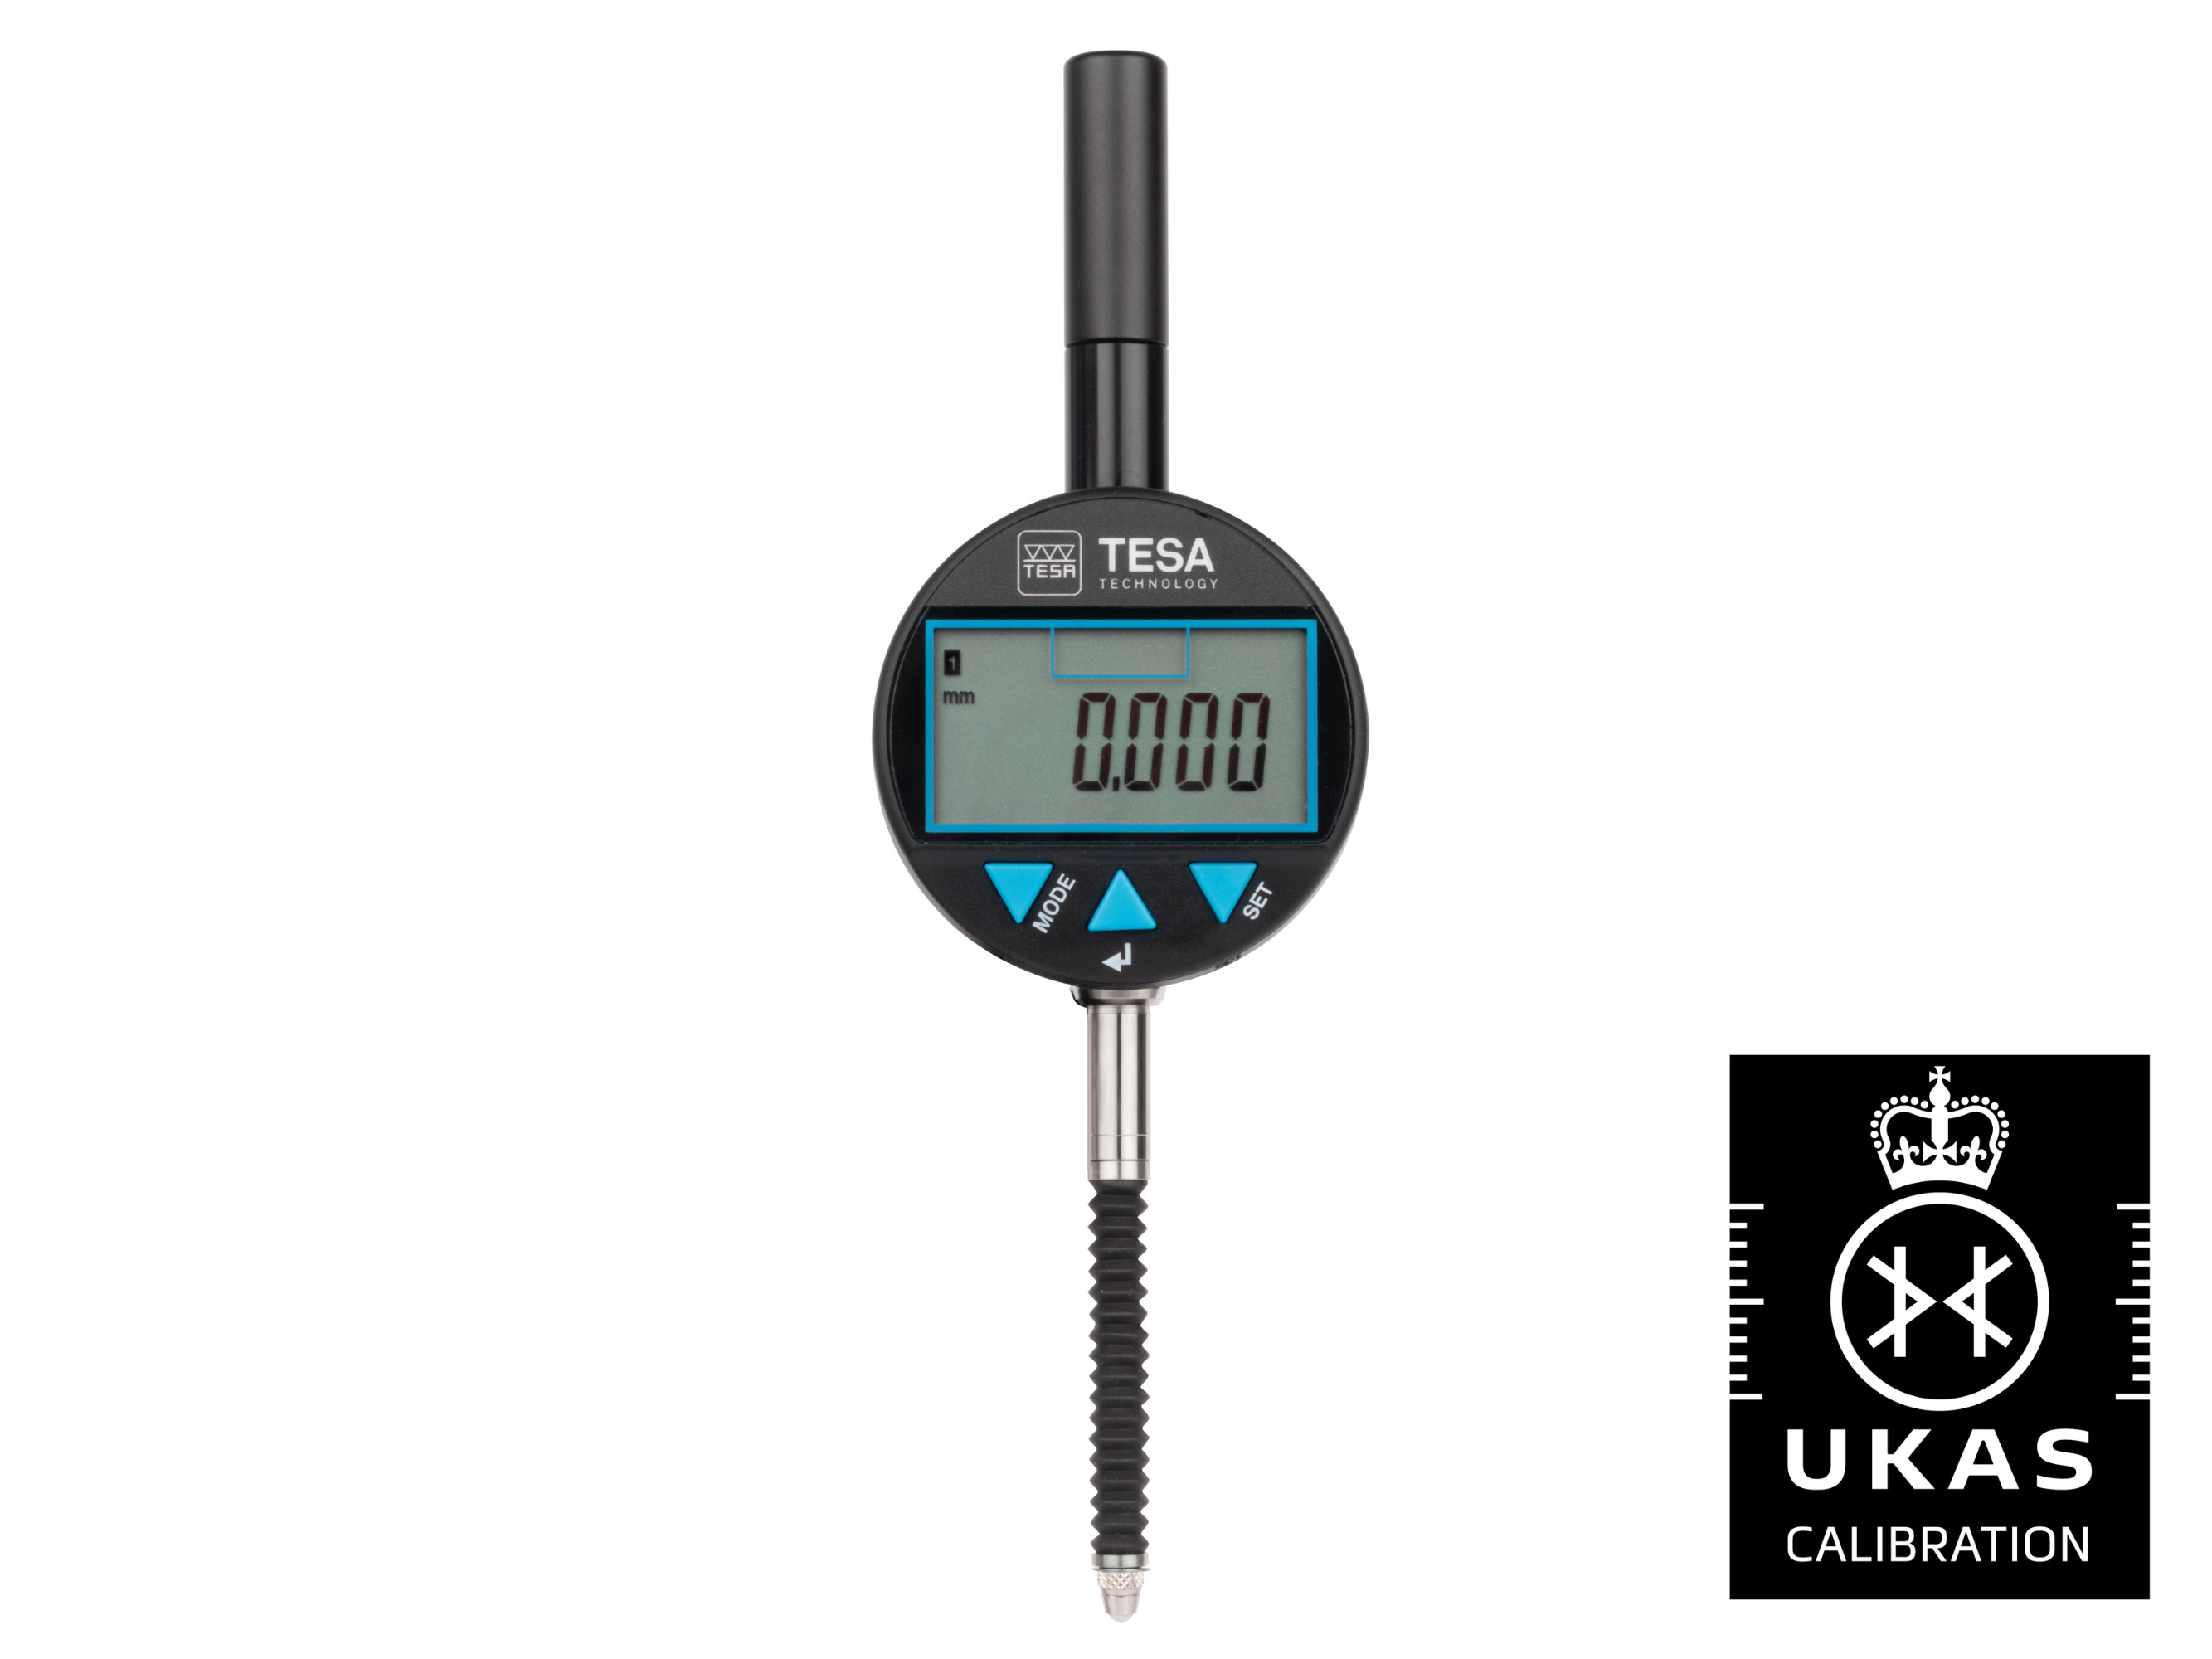 Tesa DIALTRONIC Digital Dial Gauge, measuring range 25mm Range 0.001mm Resolution IP67 01930307 with UKAS Calibration